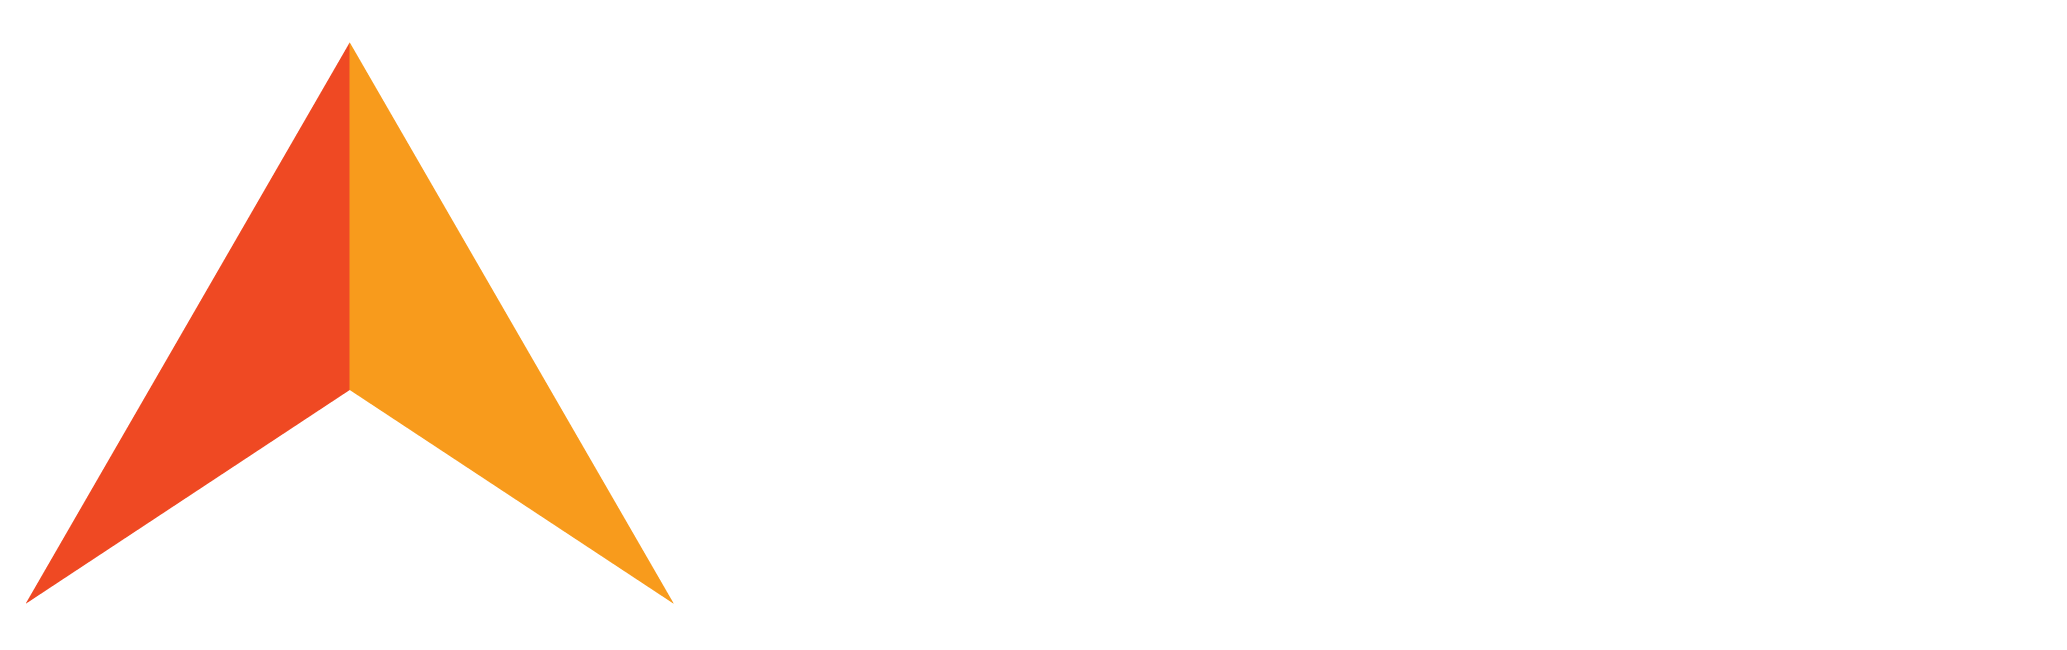 Business Navigation Group Logo